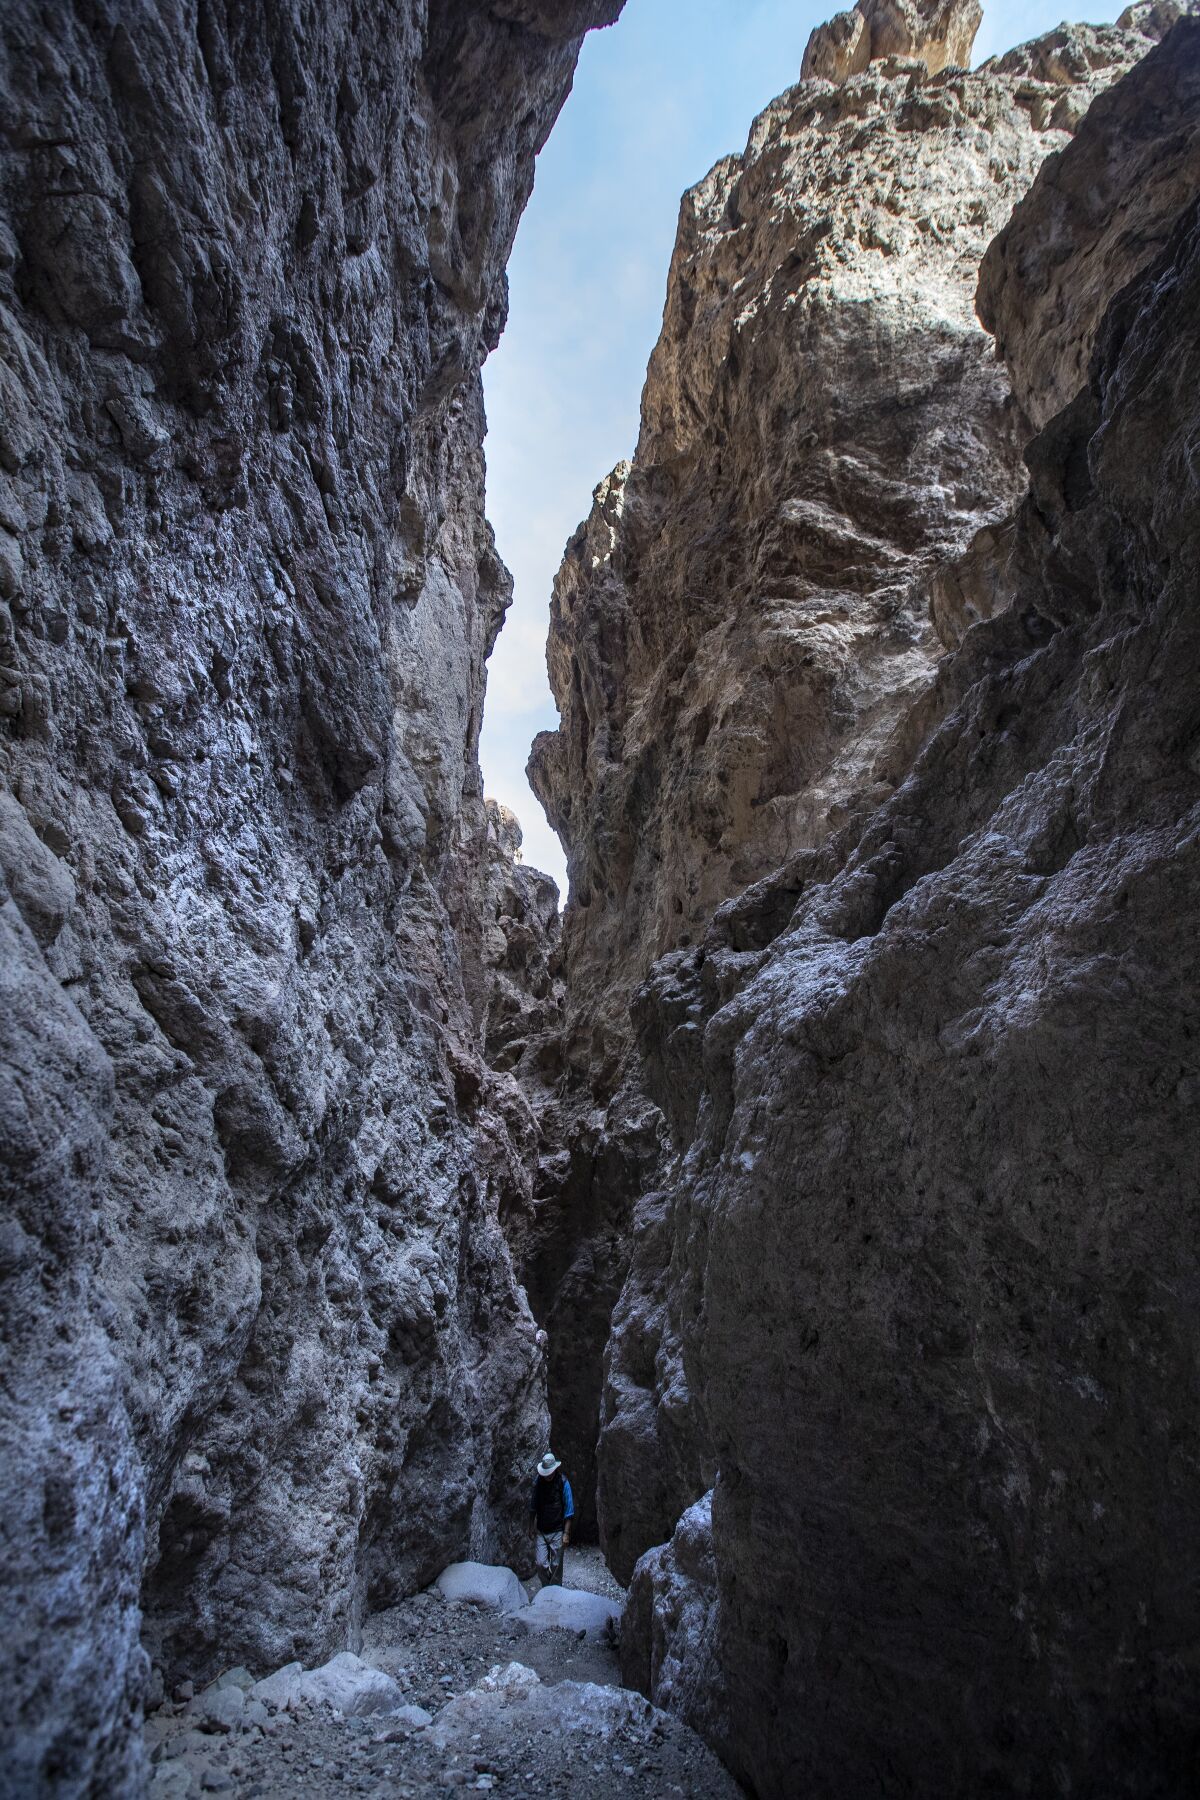 A hiker climbs into the slot canyon.